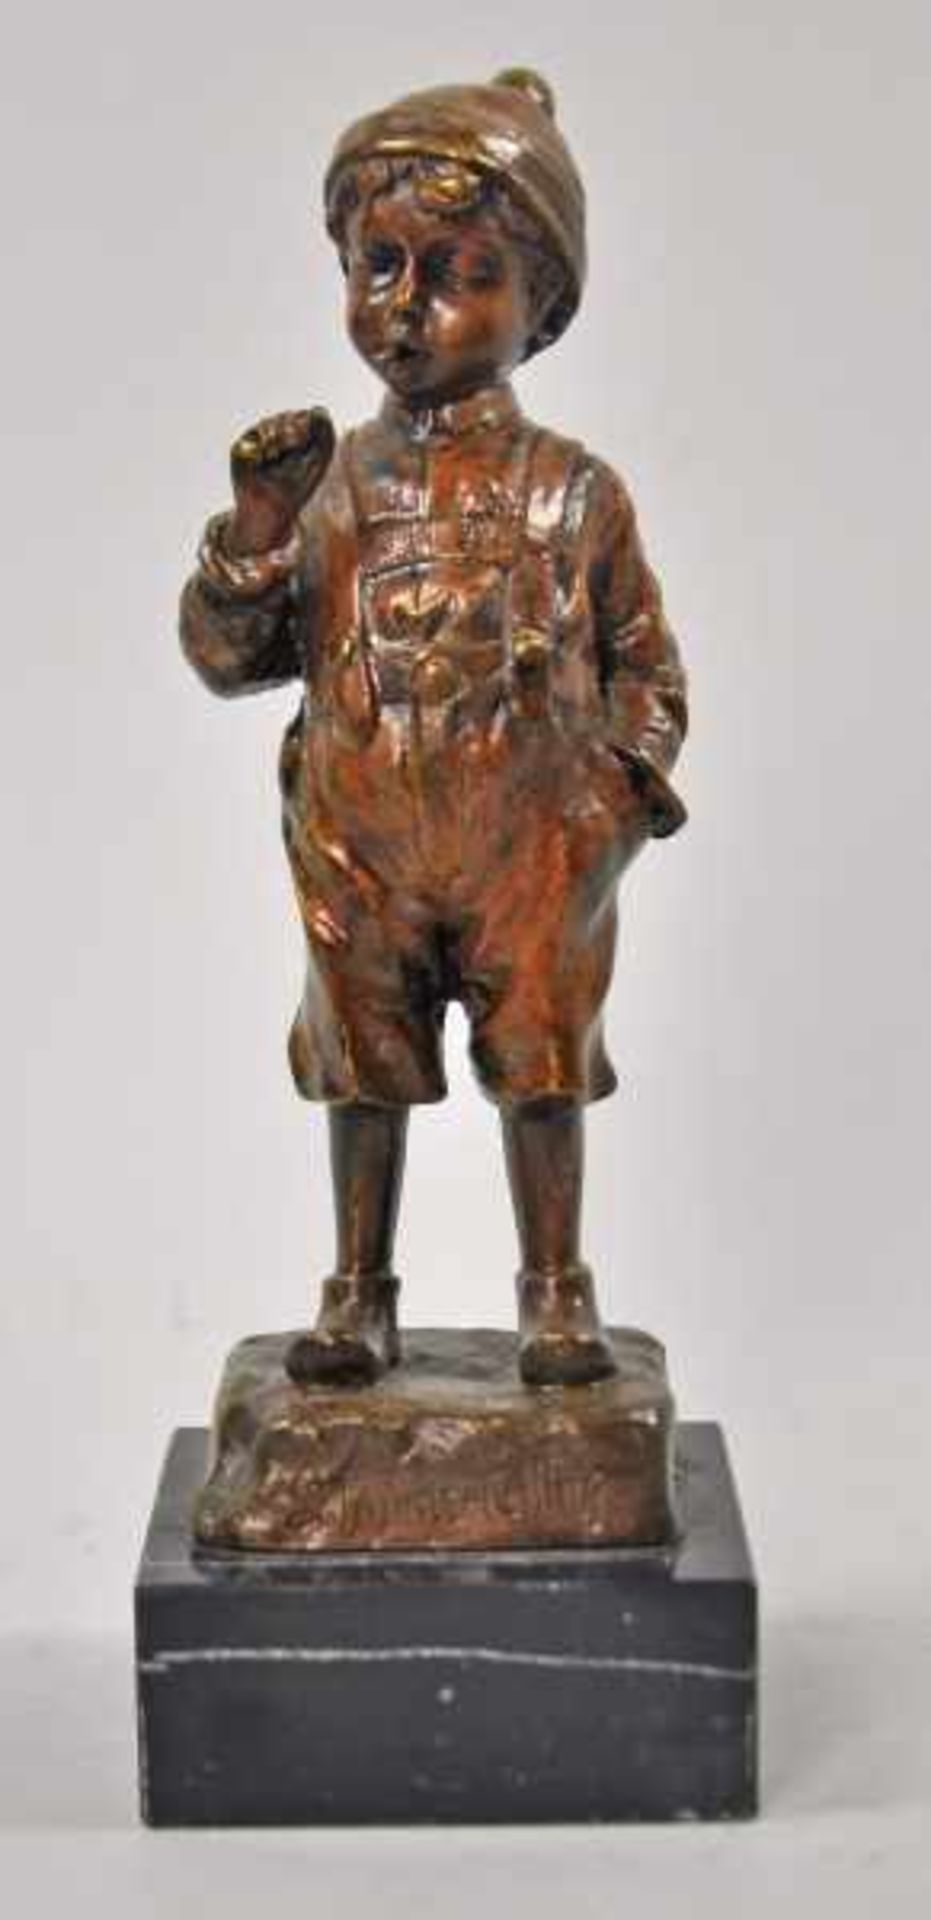 SCHMIDT-FELLING Julius Paul (1835 Berlin - 1920) "Junge mit Zigarette", eine Hand in der